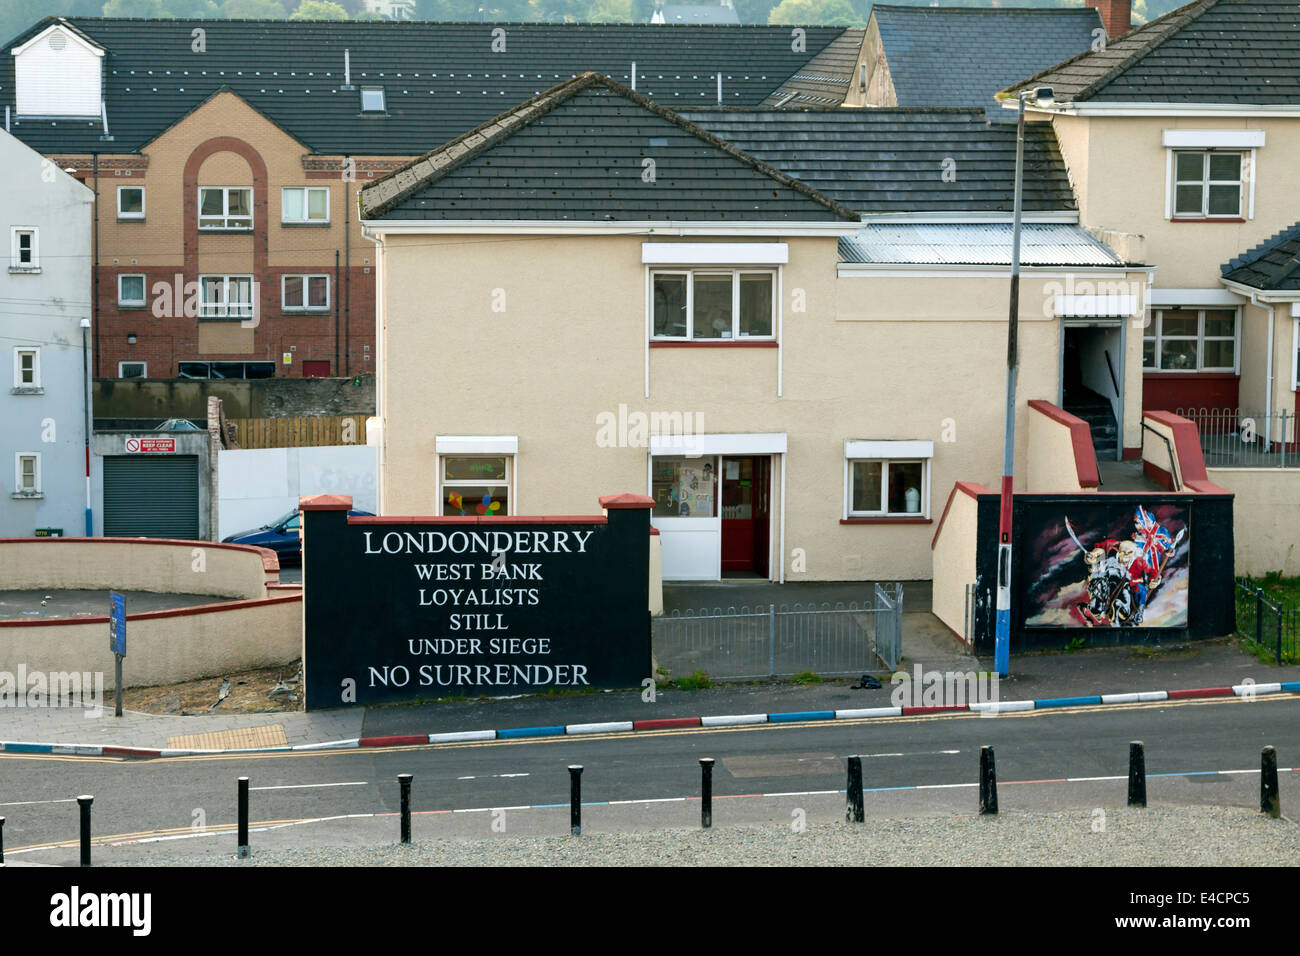 Loyalist mural in Londonderry, Northern Ireland, United Kingdom: West Bank - Loyalists-Still Under Siege- No Surrender. Stock Photo